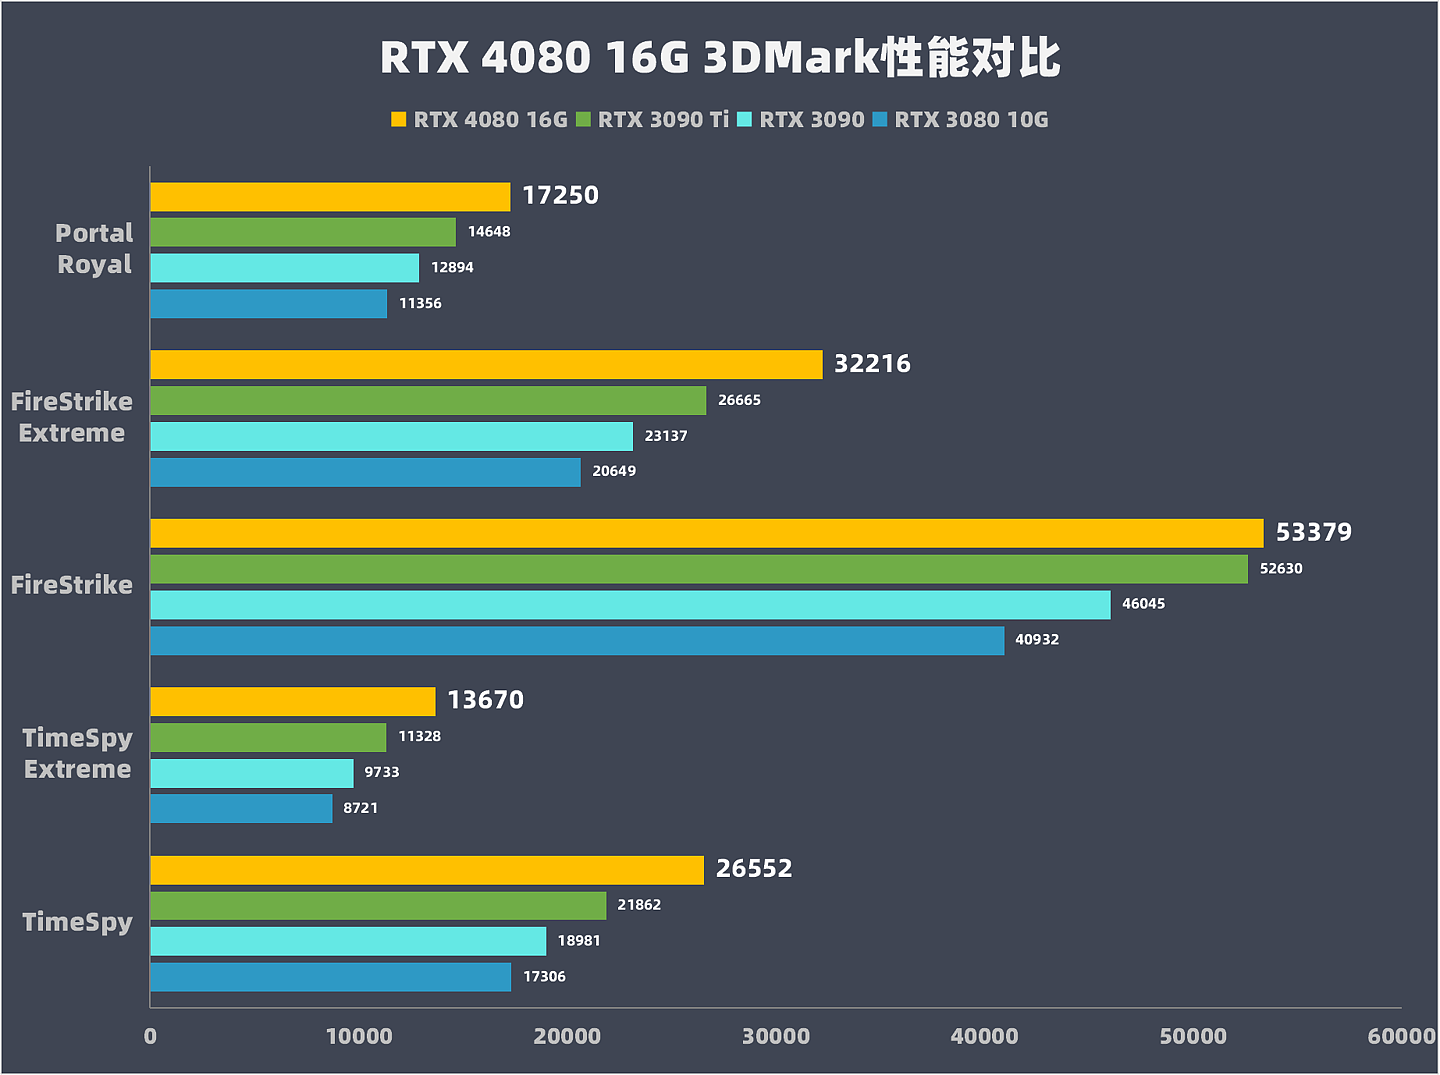 【IT之家评测室】英伟达 GeForce RTX 4080 16G 首发评测：大胜 RTX 3090Ti，坐稳高端宝座 - 23